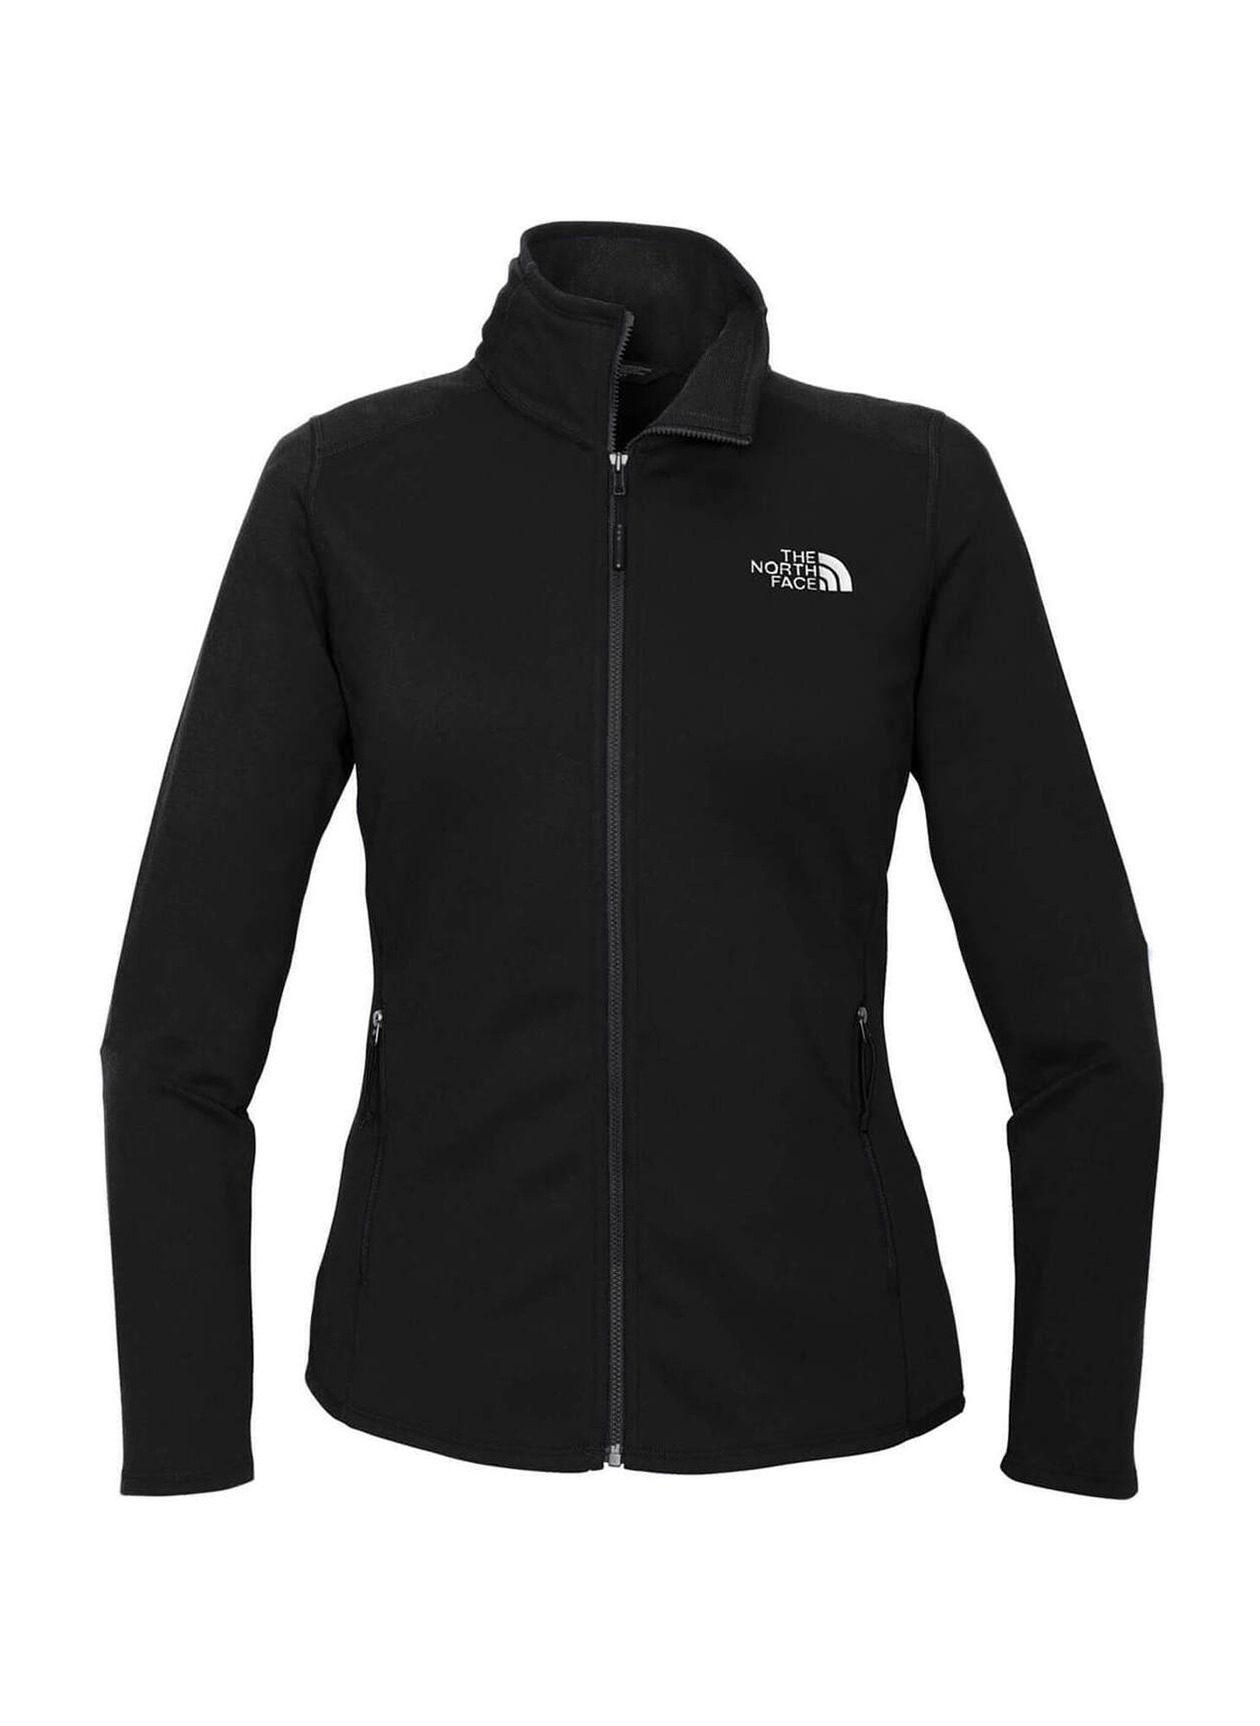 The North Face Women's TNF Black Skyline Fleece Jacket